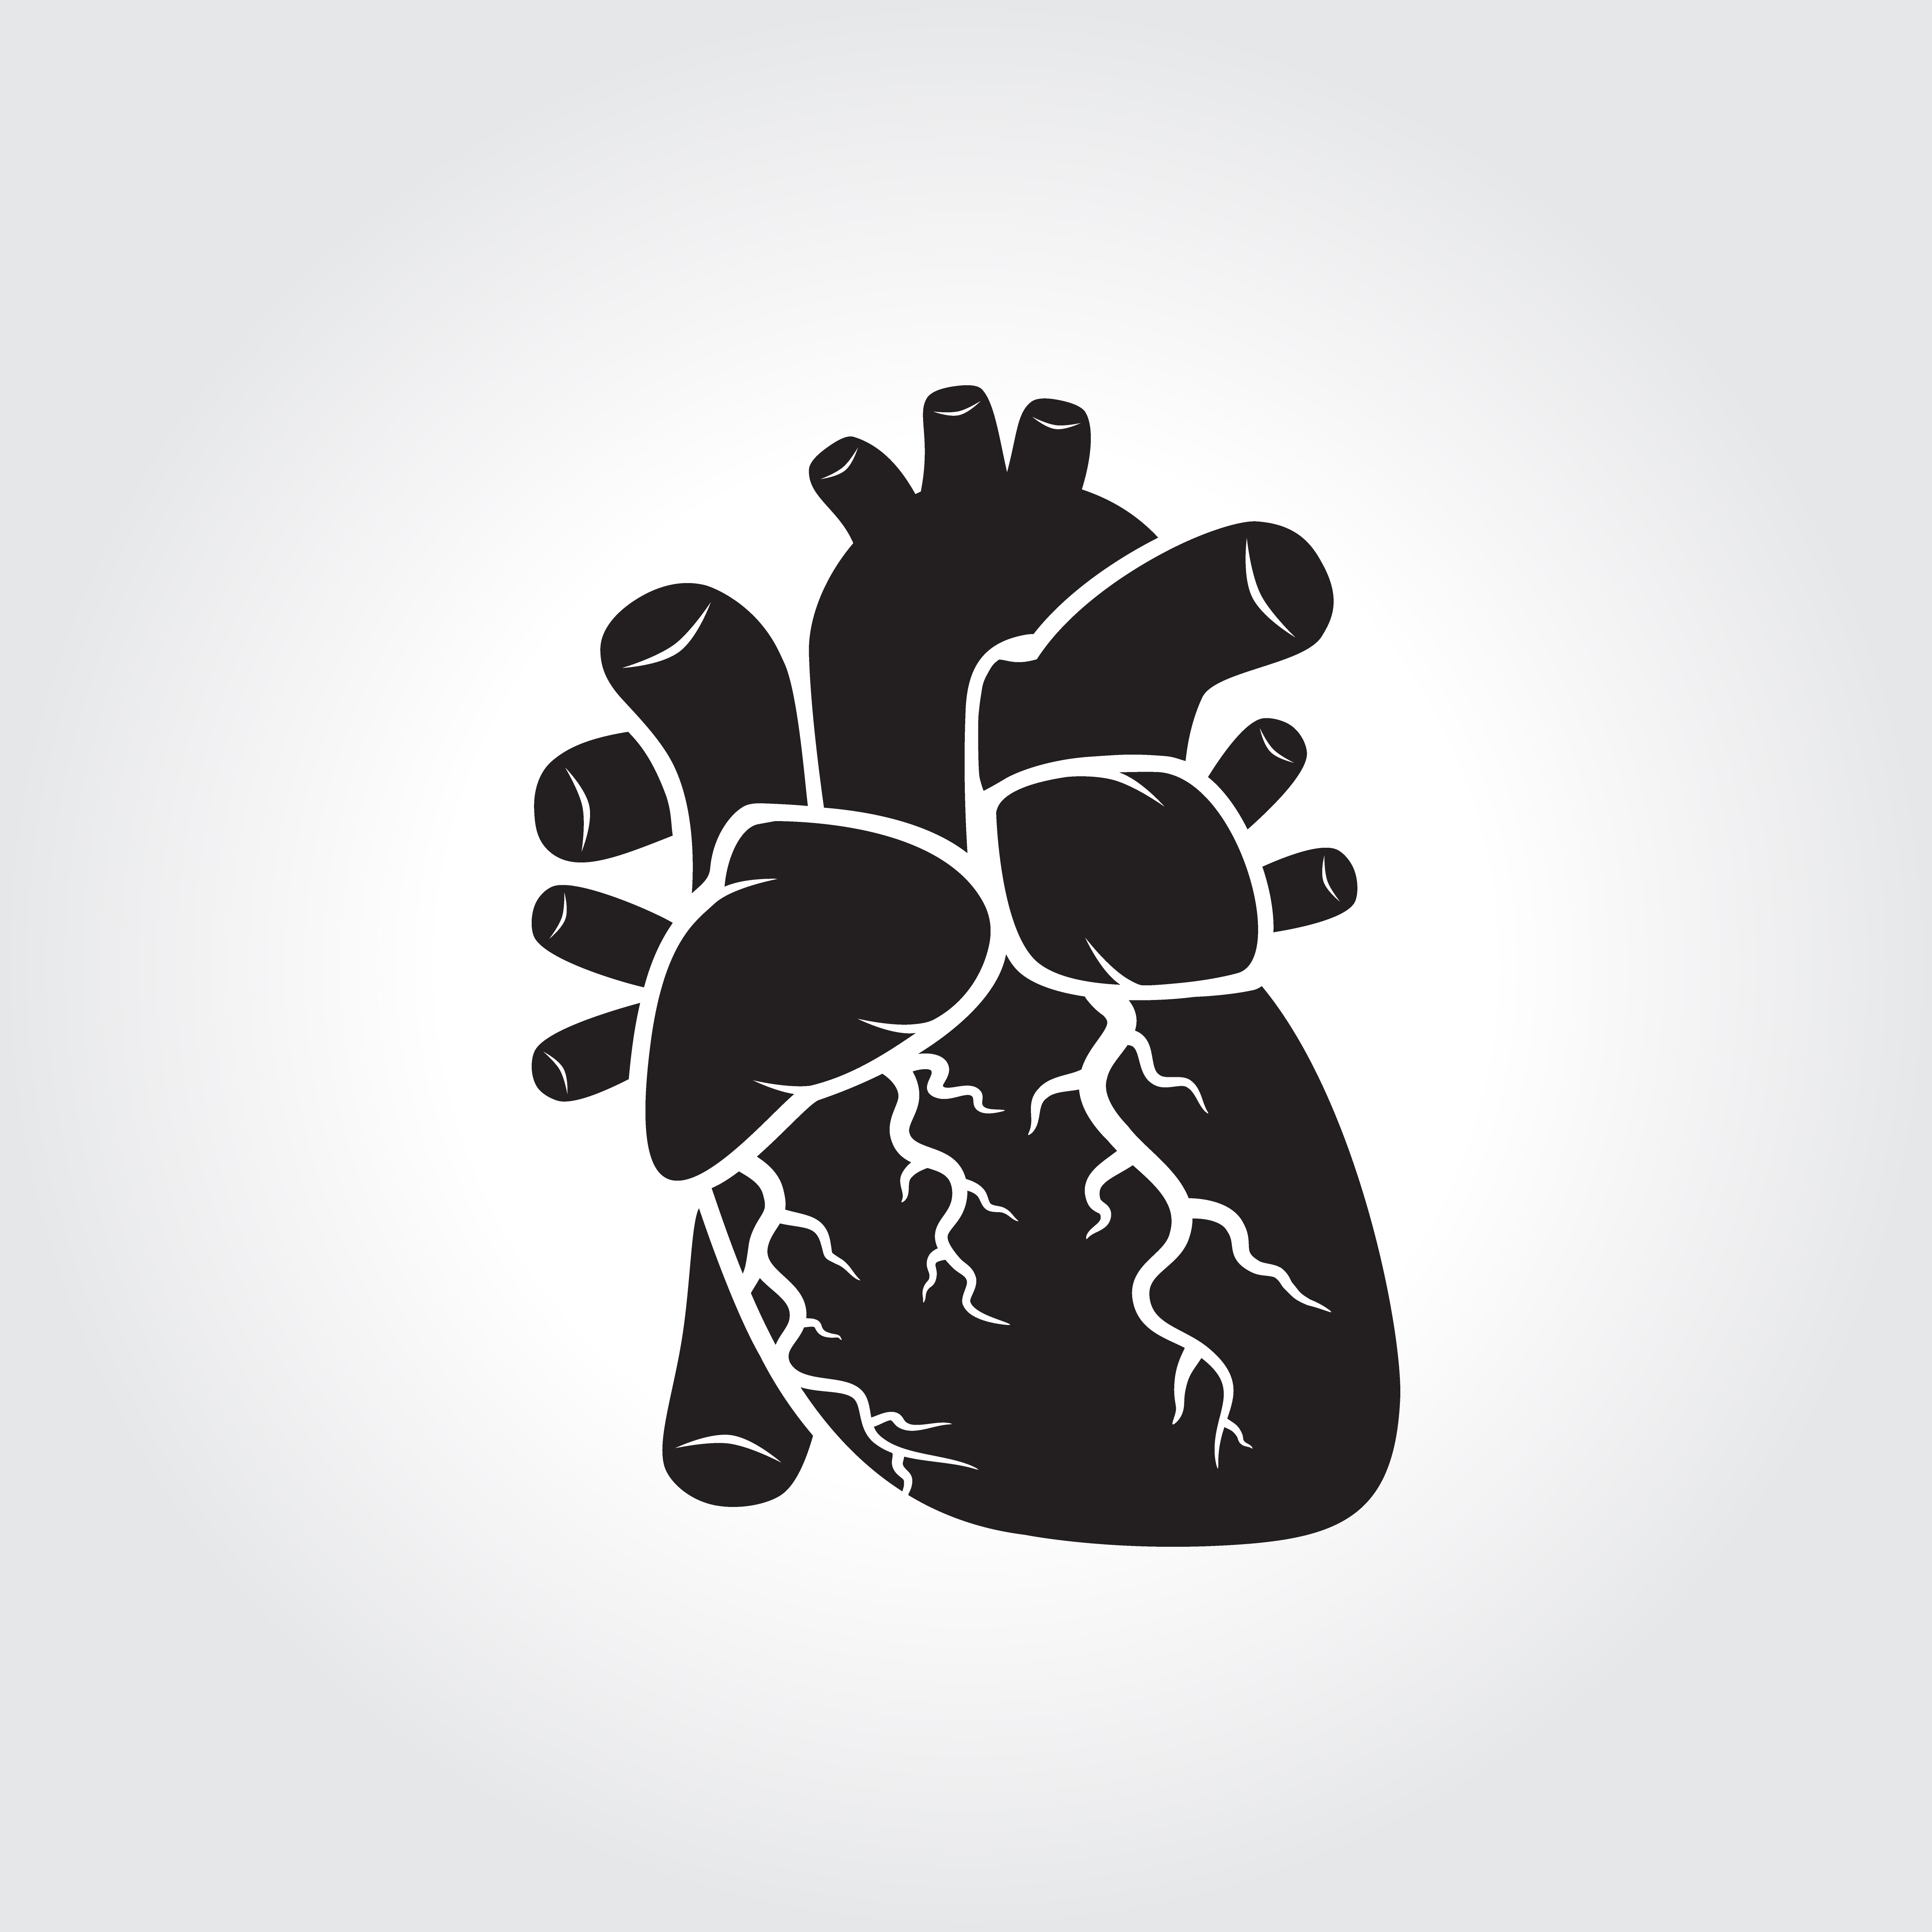 Download Heart anatomy symbol - Download Free Vectors, Clipart ...